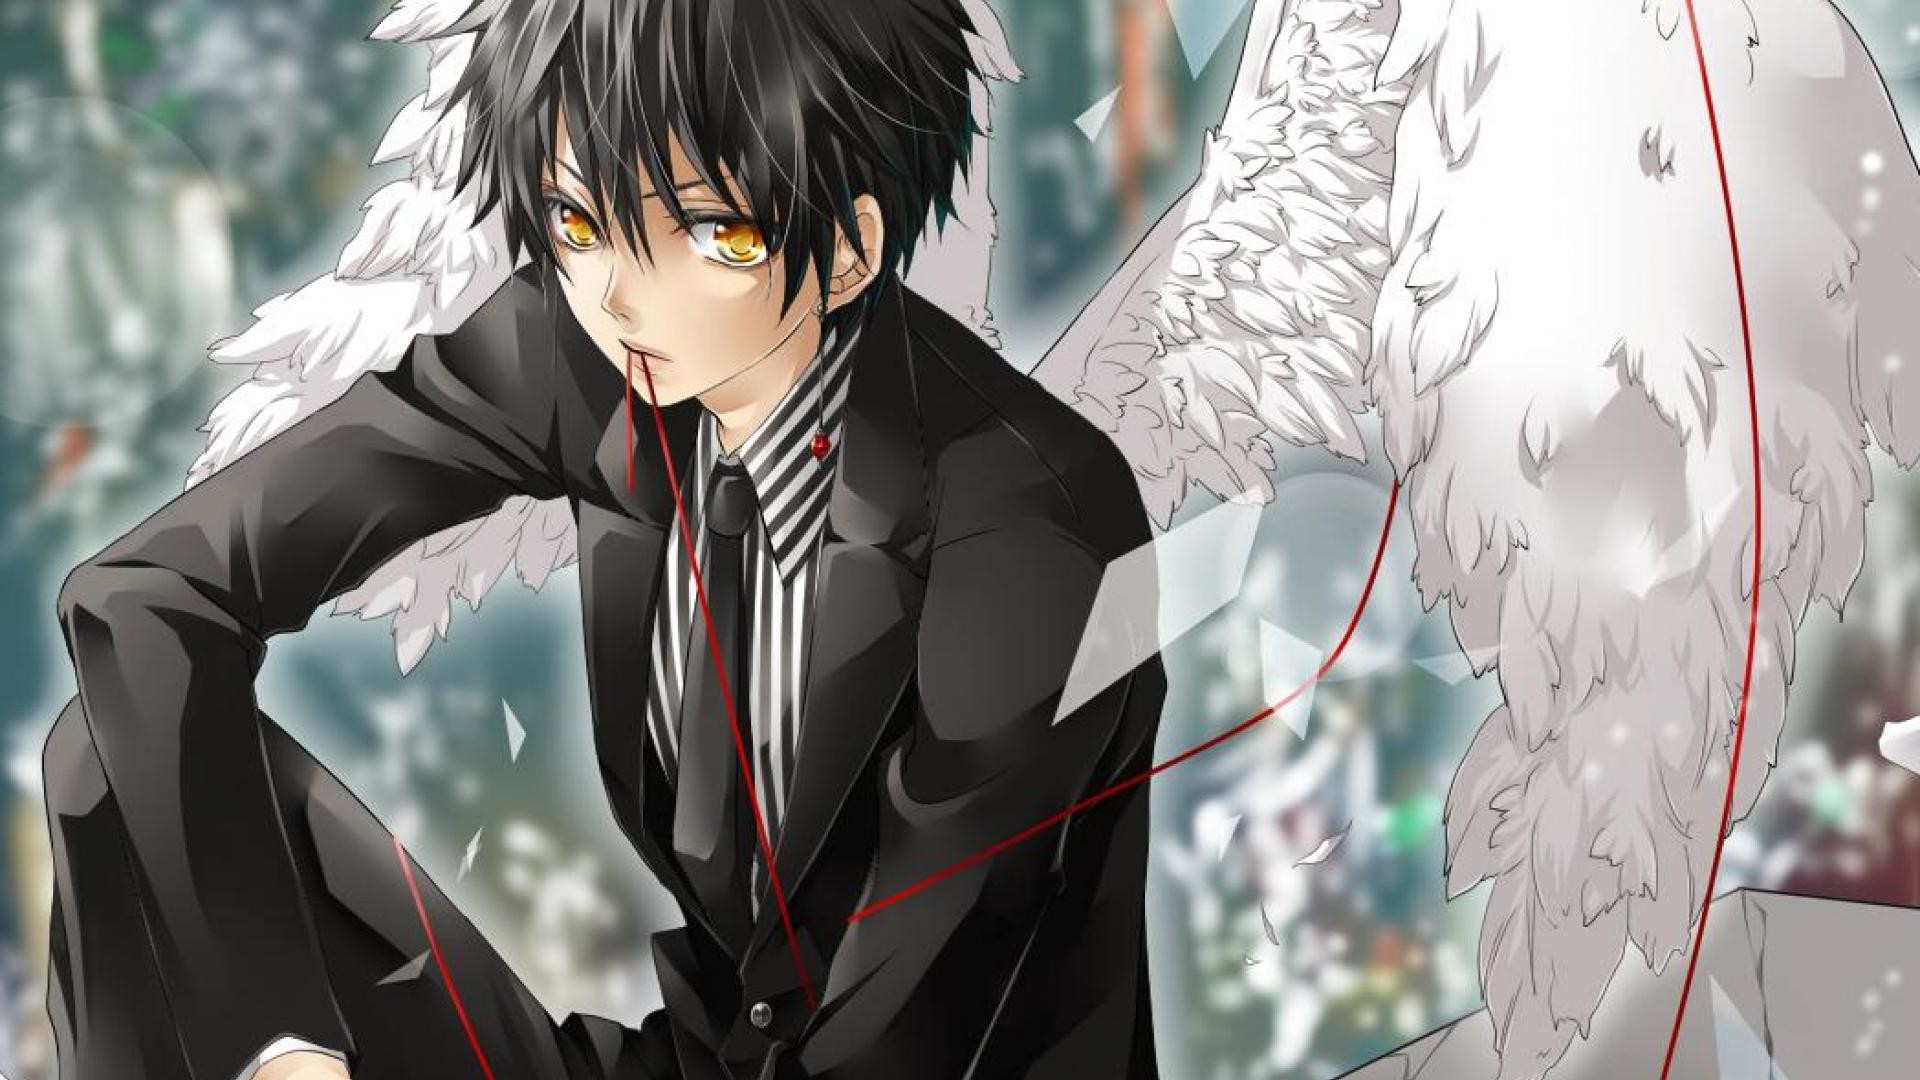 Anime angel boy wallpaper data